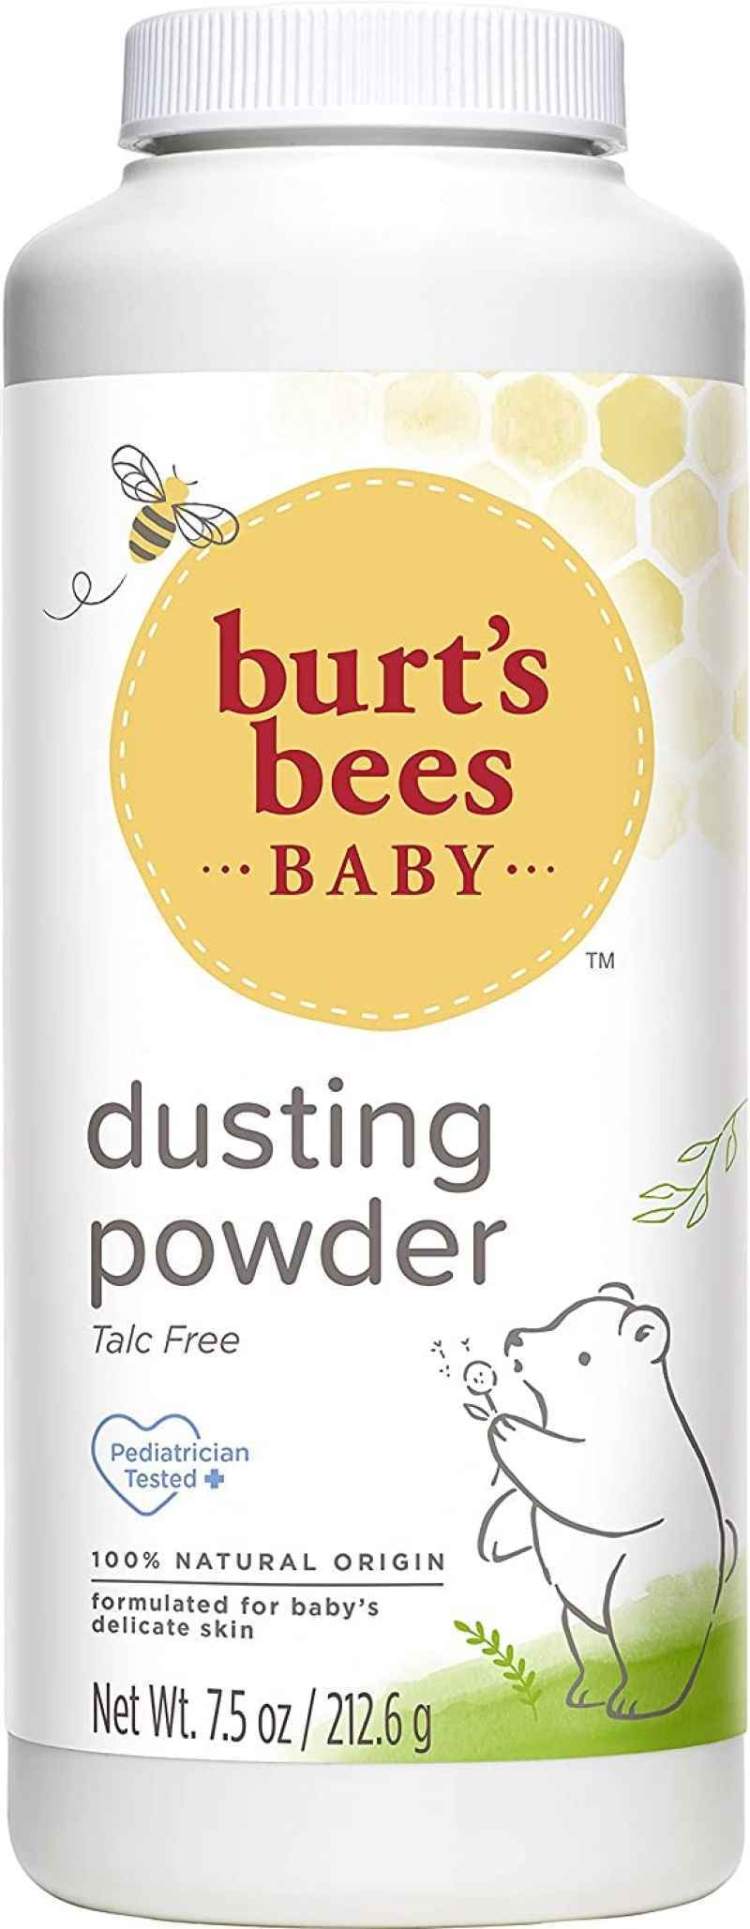 Burts-Bees-Dusting-Baby-Powder